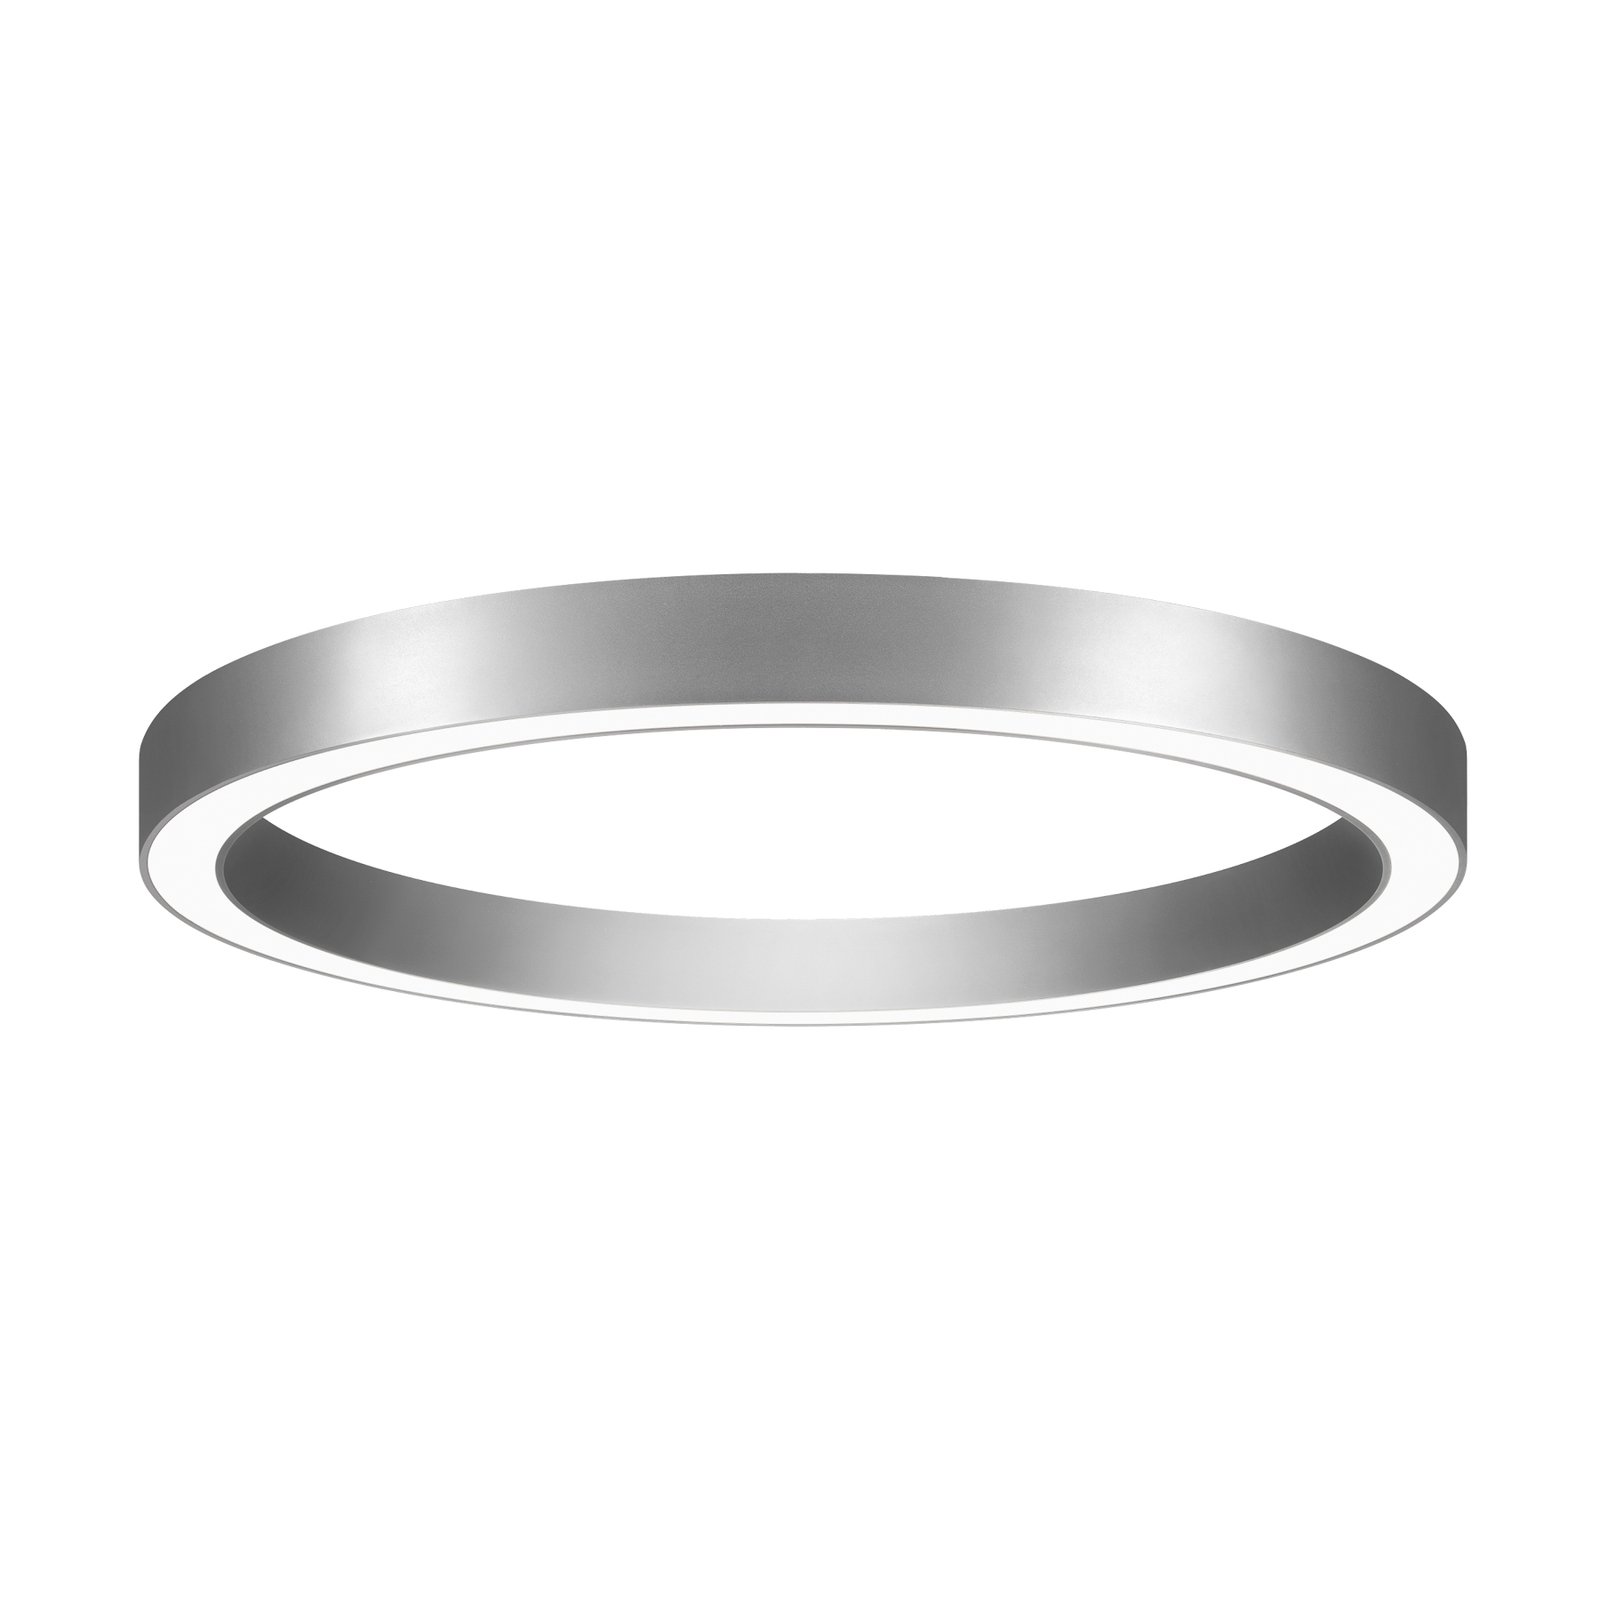 BRUMBERG Biro Circle Ring, Ø 60 cm, Casambi, silver, 830